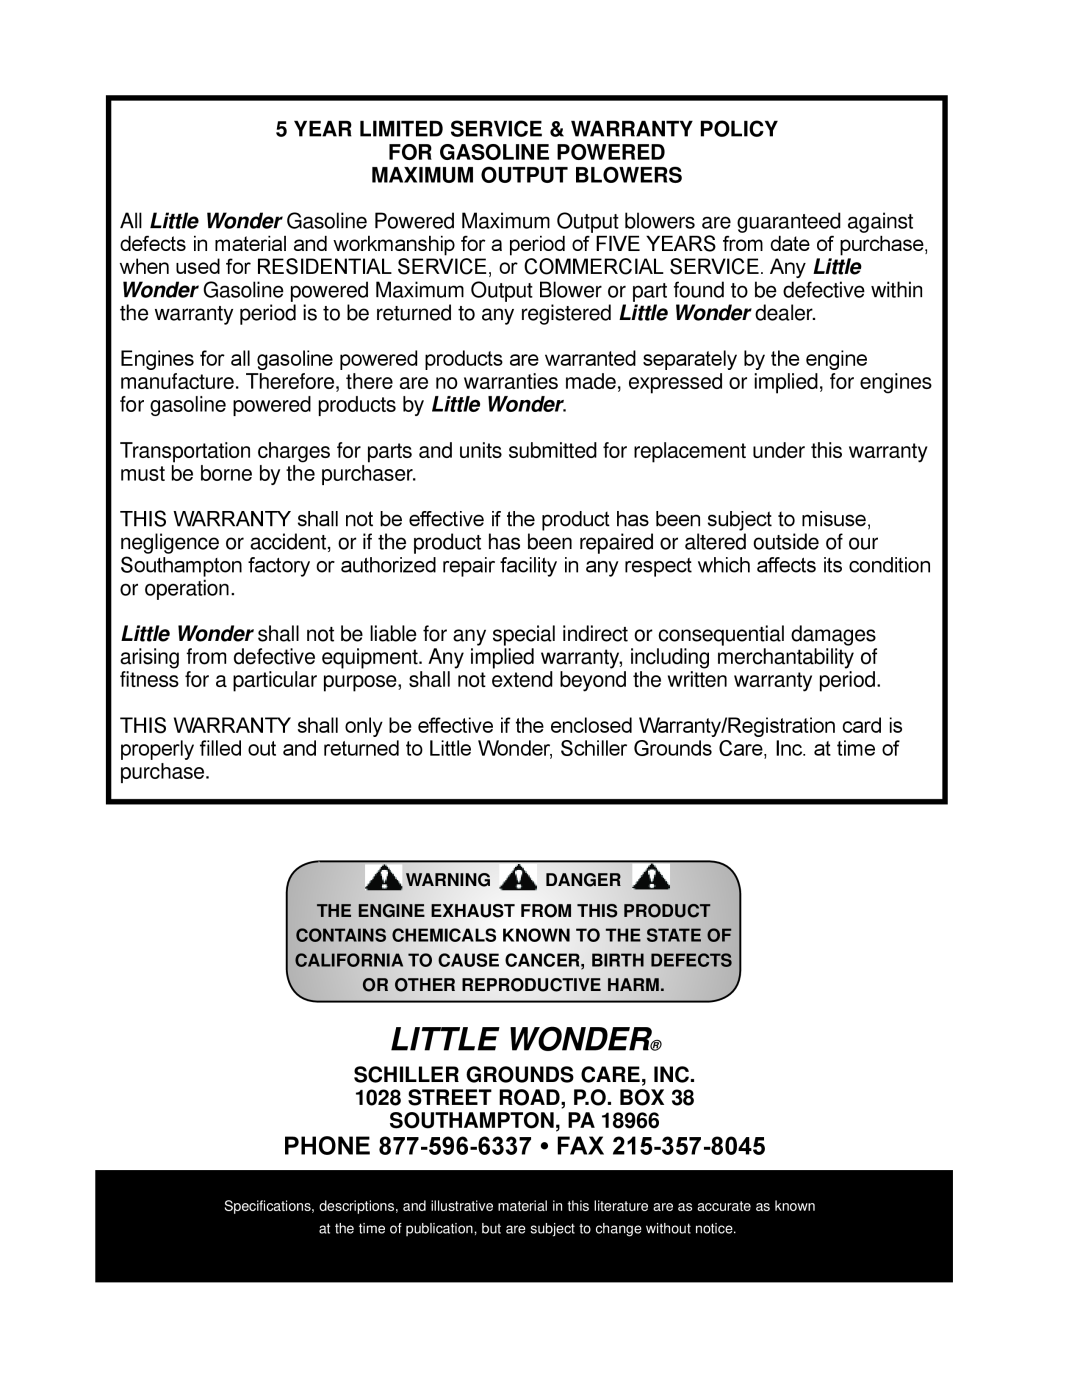 Little Wonder LB900-00-01 technical manual Little Wonder, PHONE 877-596-6337 FAX, MAXIMUM output blowers 